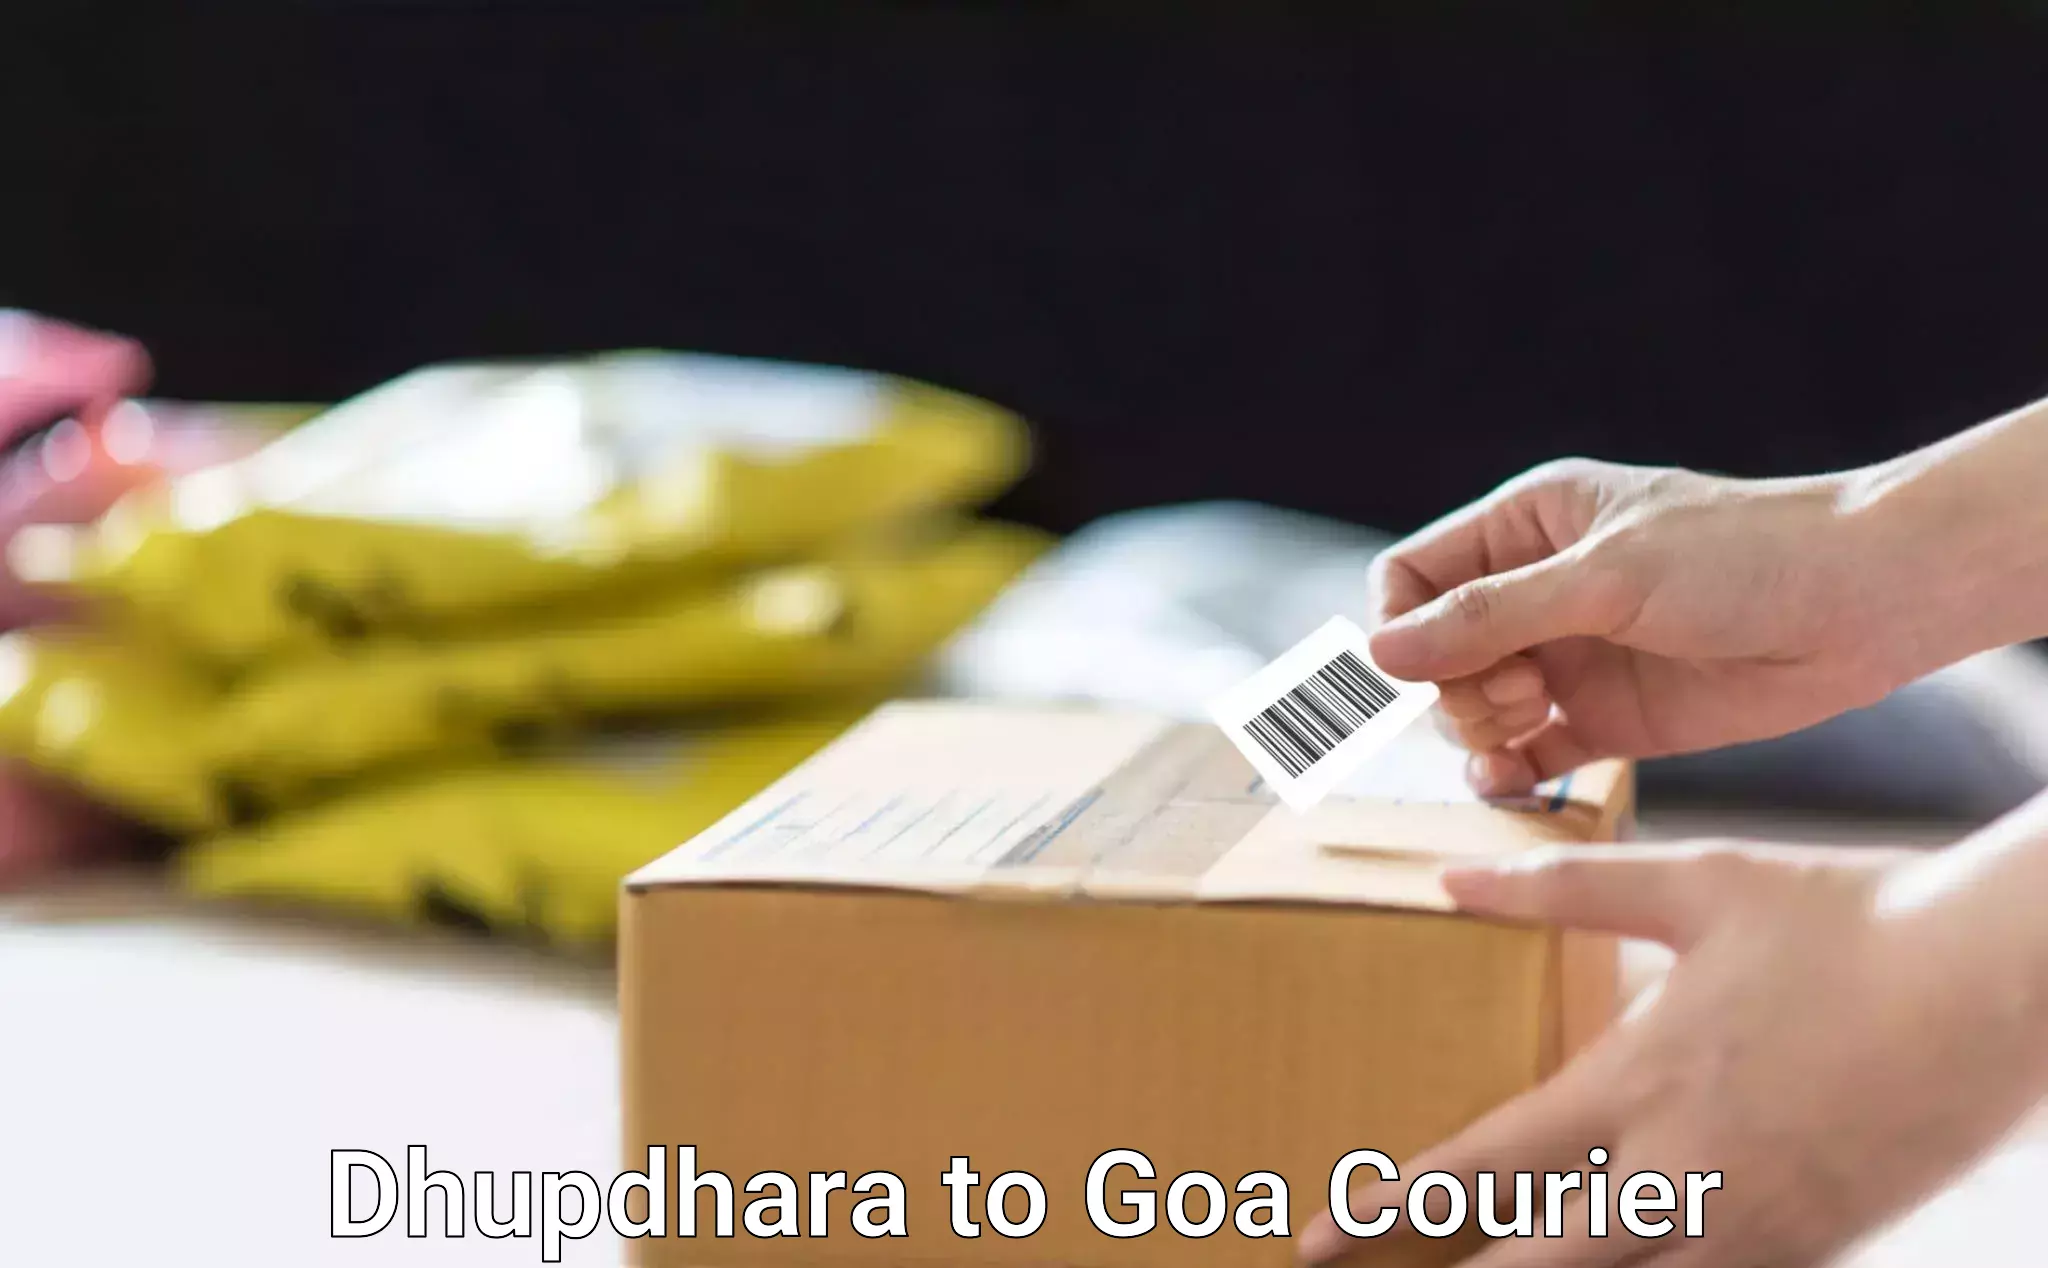 24-hour courier service Dhupdhara to Goa